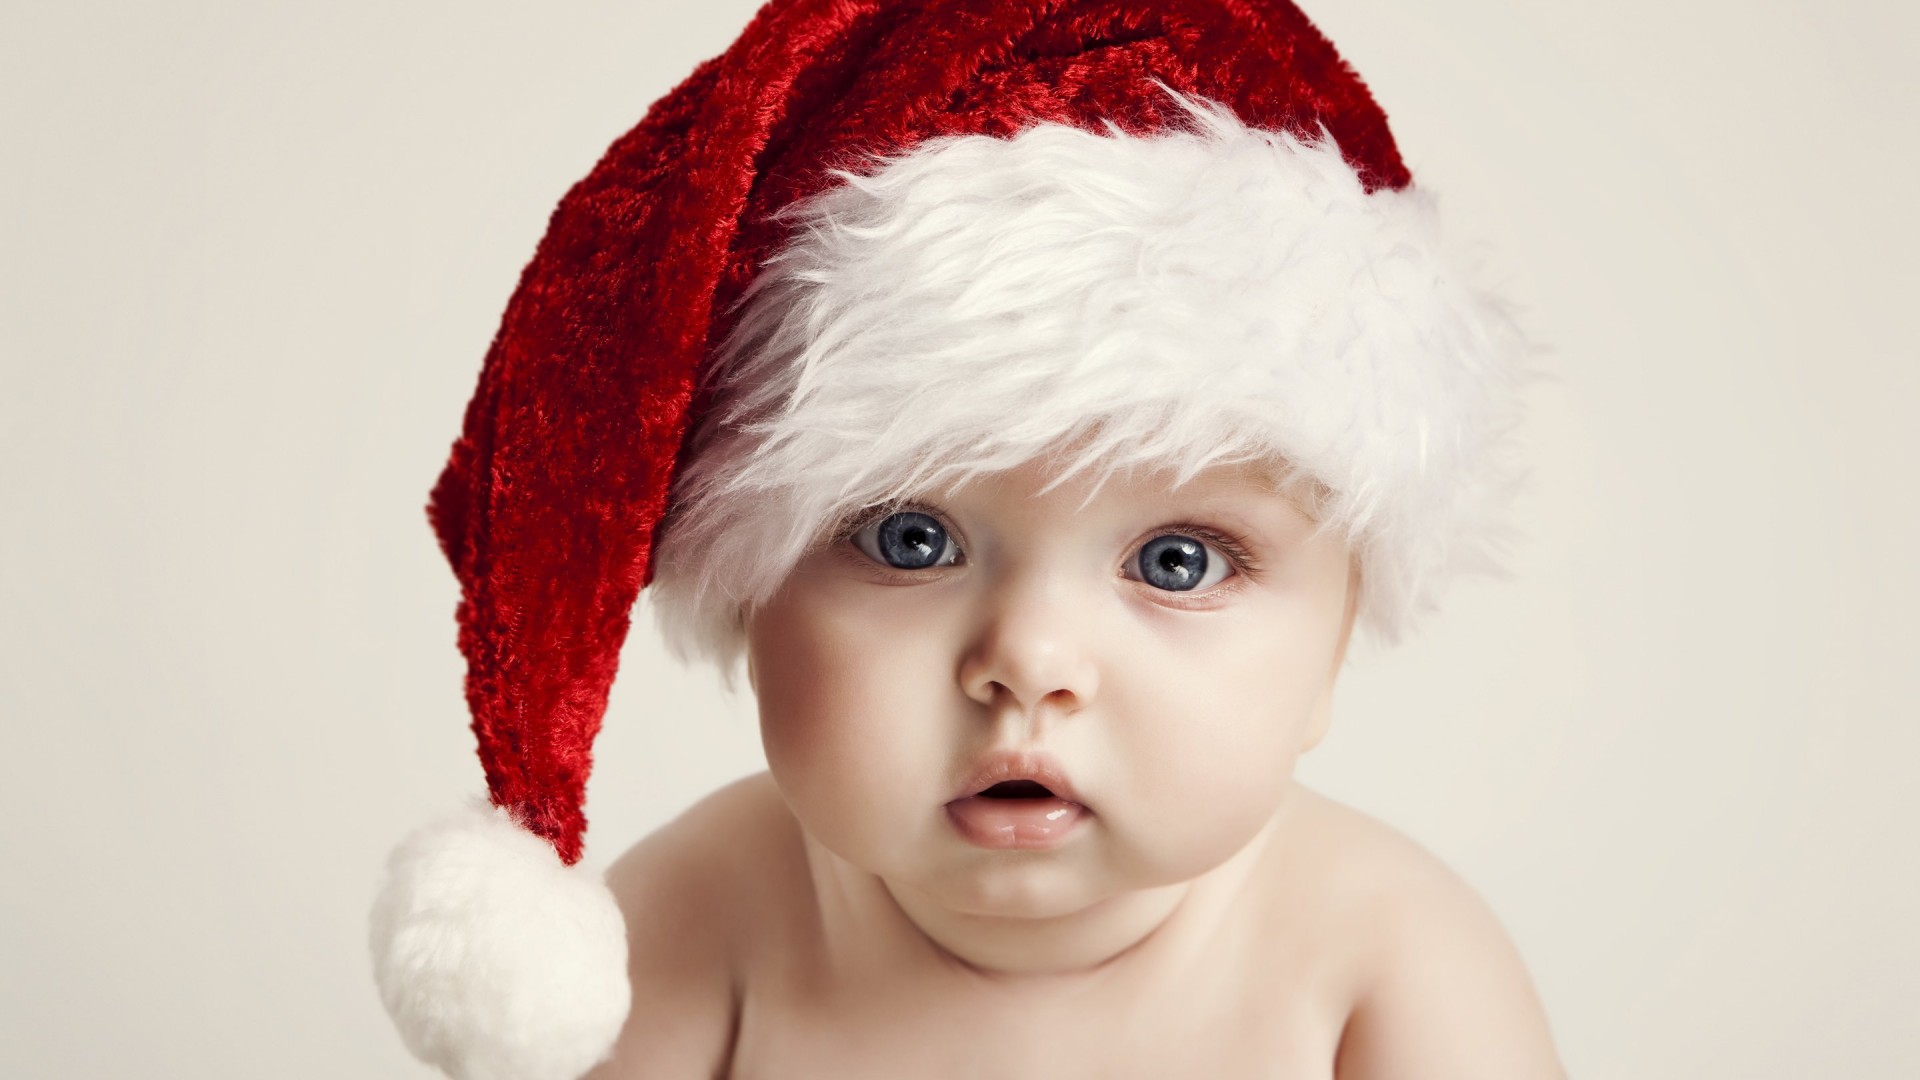 Santa Claus Baby Boy Wallpaper for Desktop 1920x1080